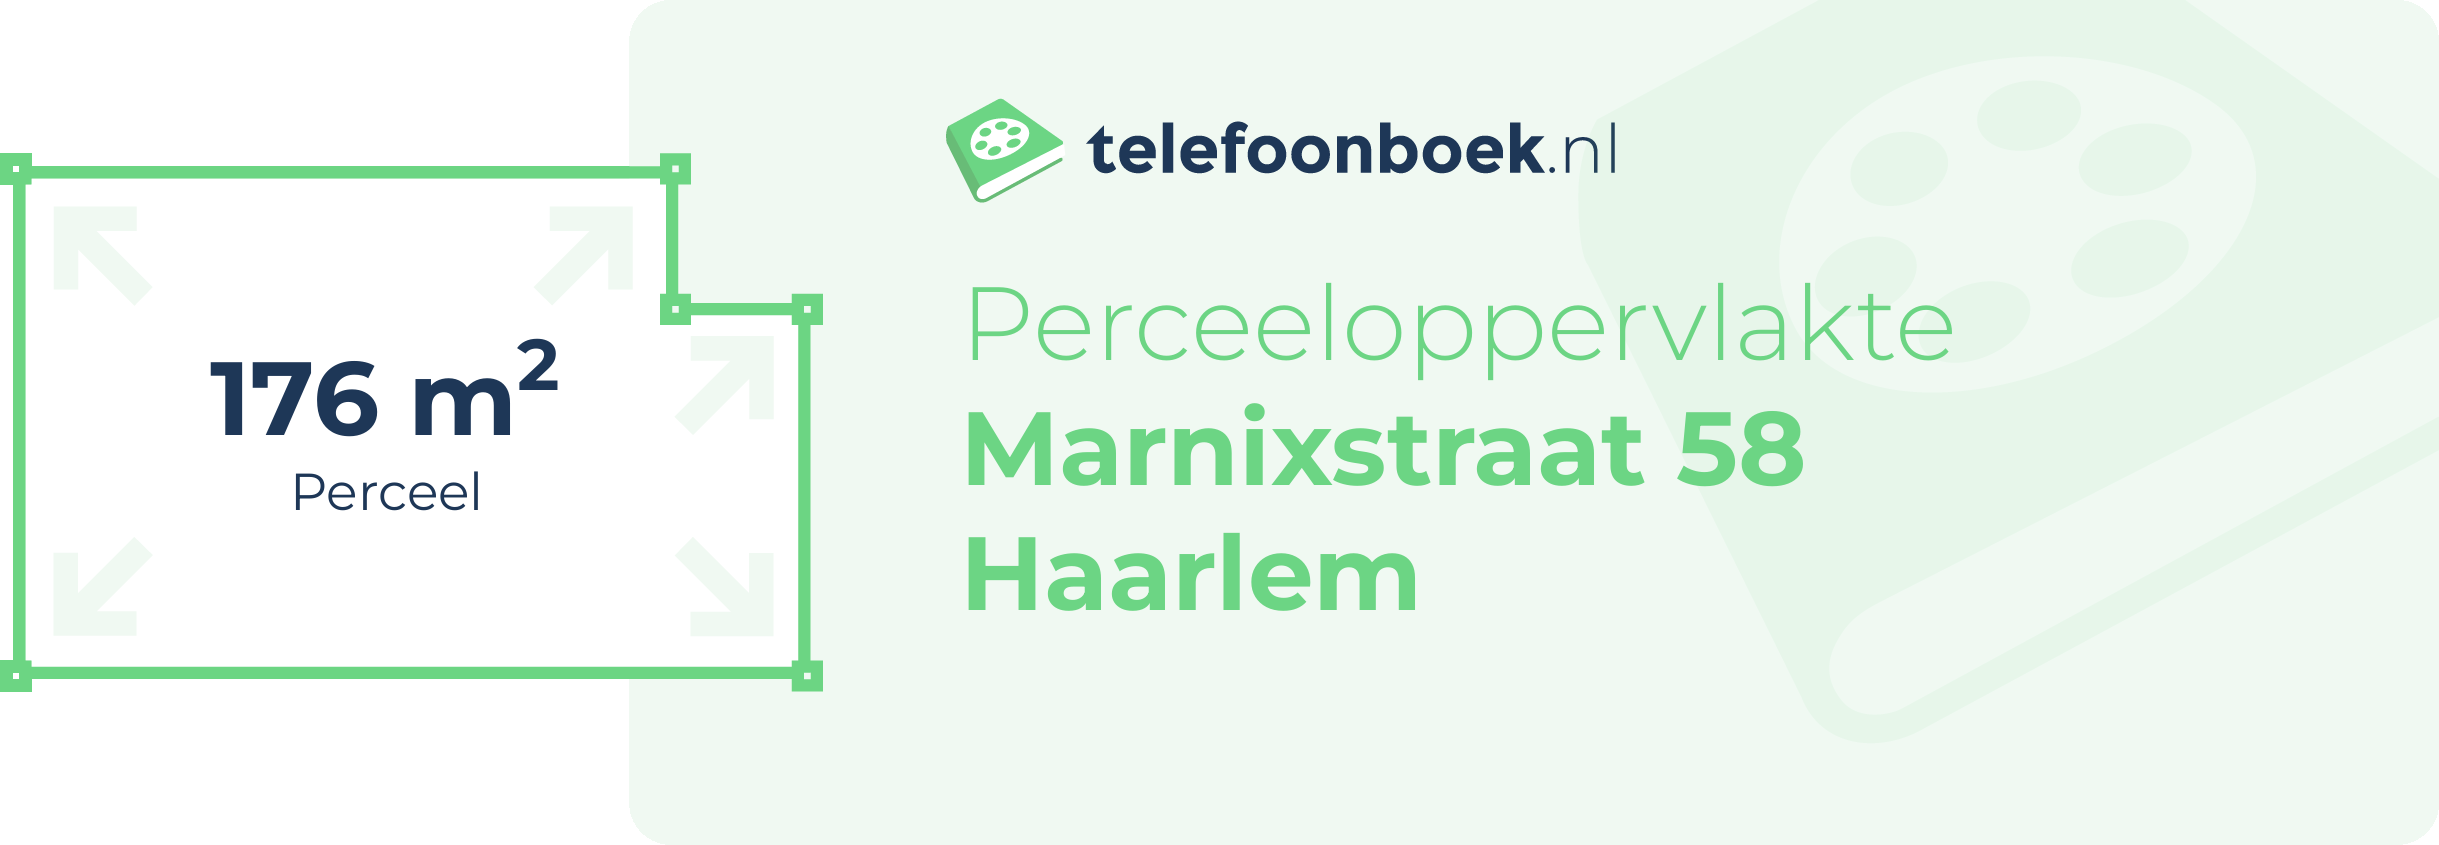 Perceeloppervlakte Marnixstraat 58 Haarlem